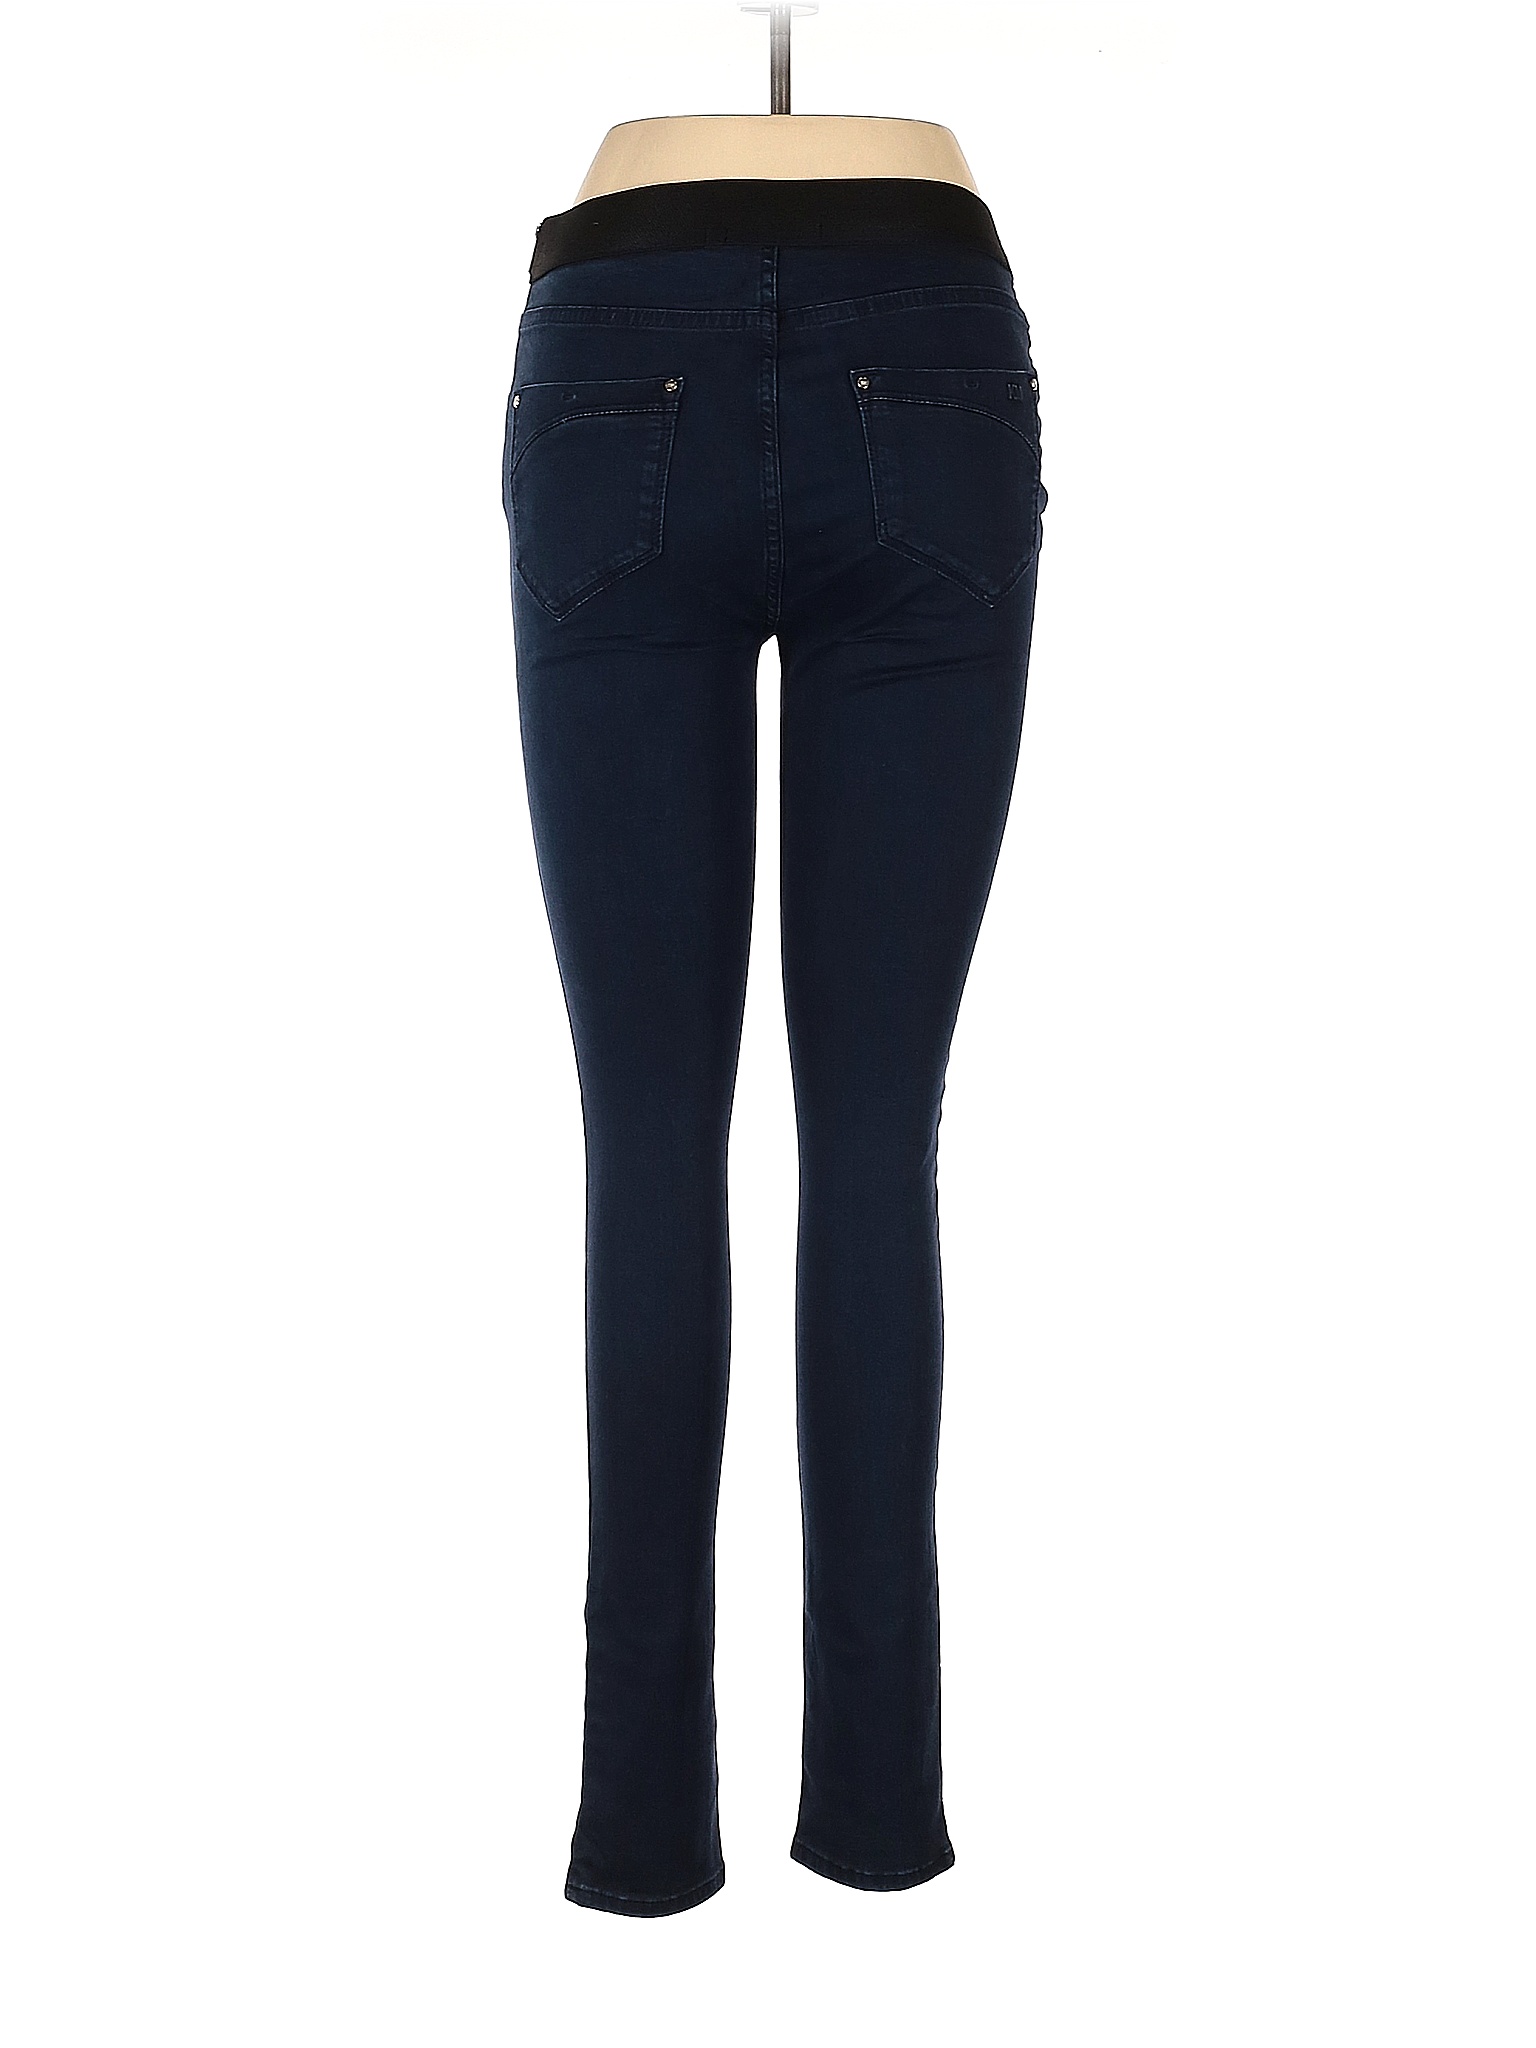 Snavset Hvem Avl Karen Millen Women's Jeans On Sale Up To 90% Off Retail | thredUP